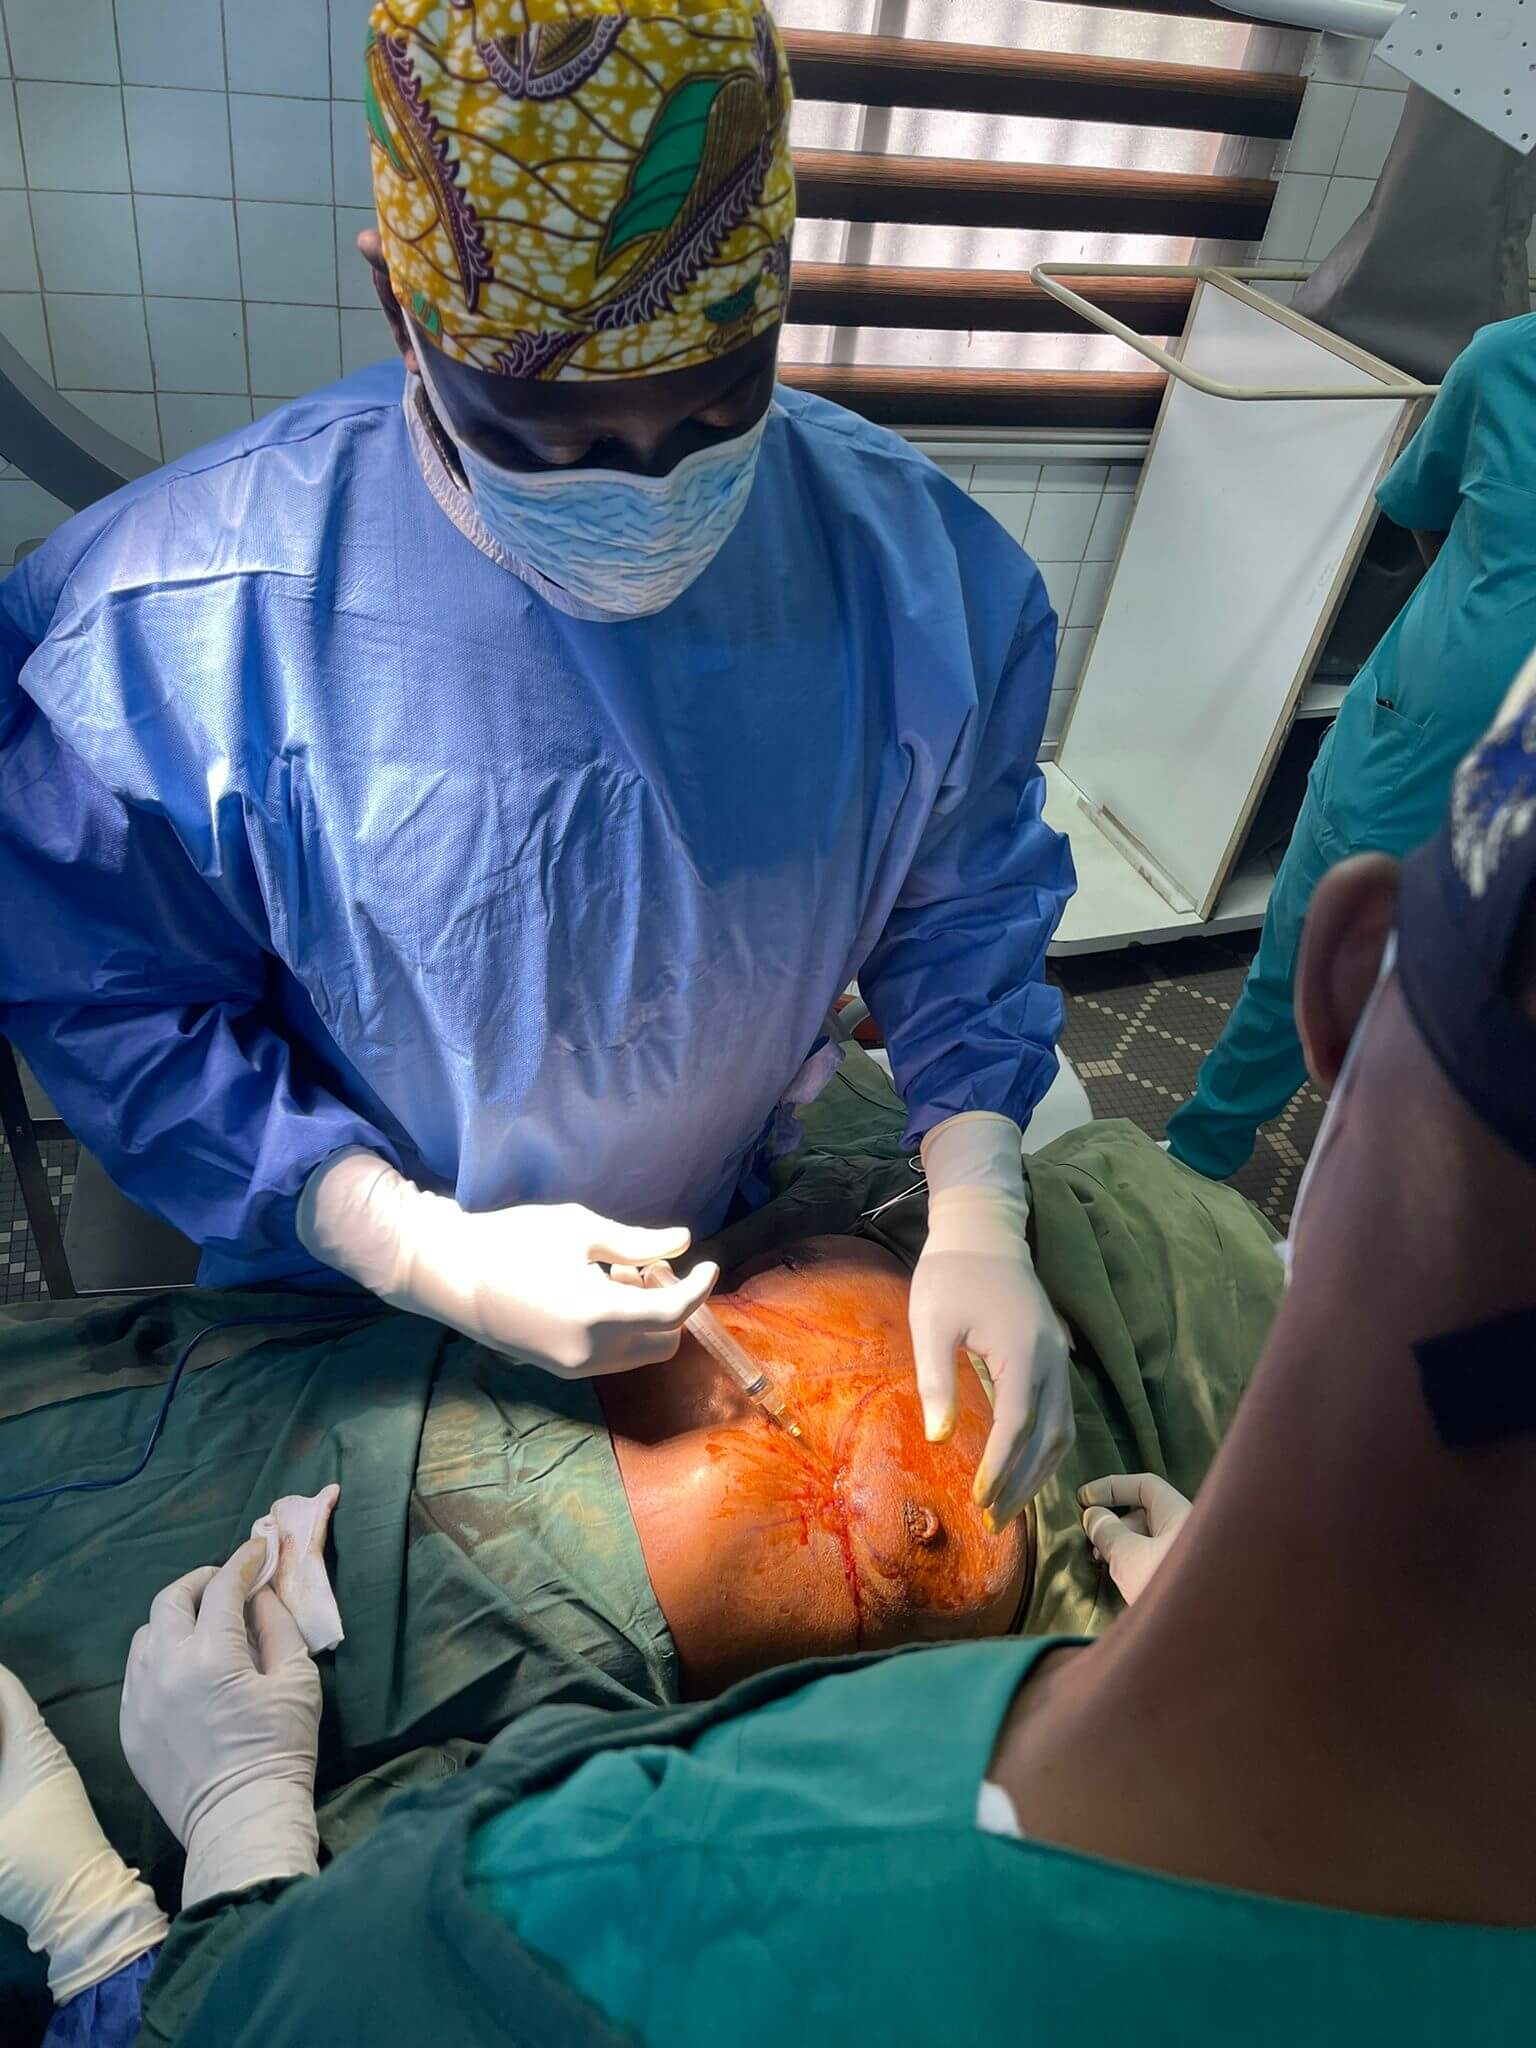 R.E.S.T.O.R.E. Worldwide, Inc. is providing free reconstructive surgery in Yaoundé, Cameroon